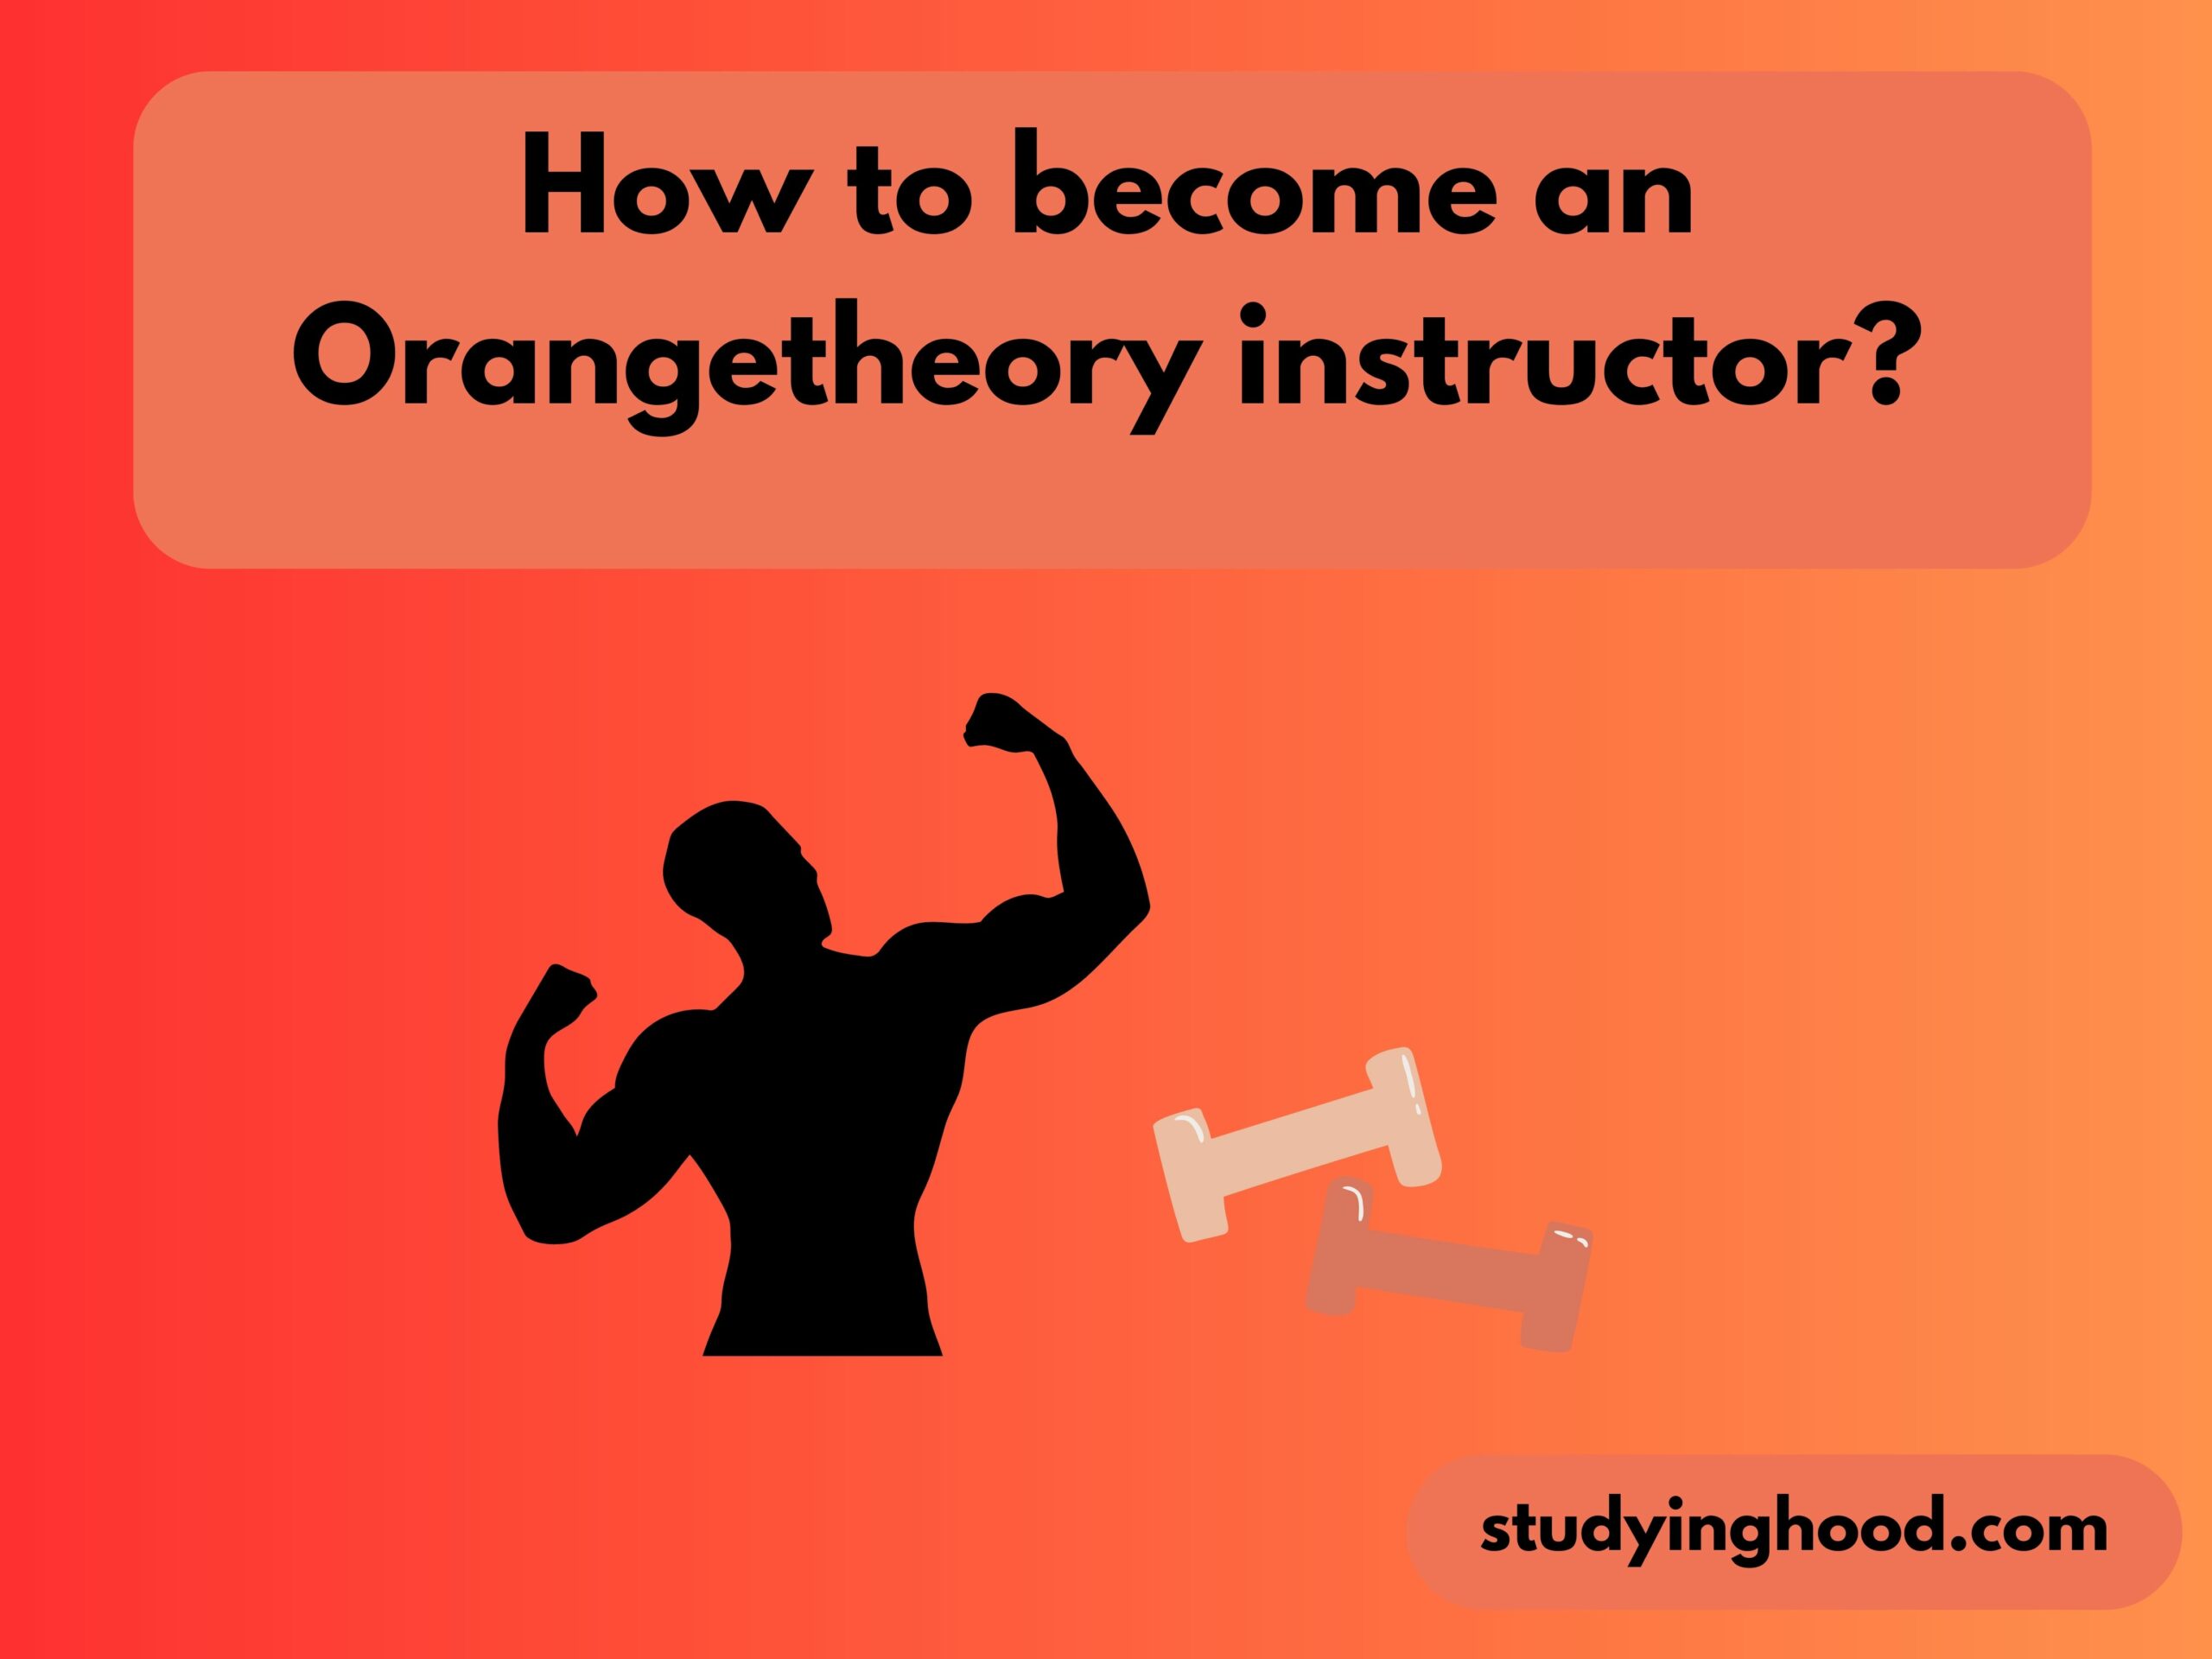 How to become an Orangetheory instructor?